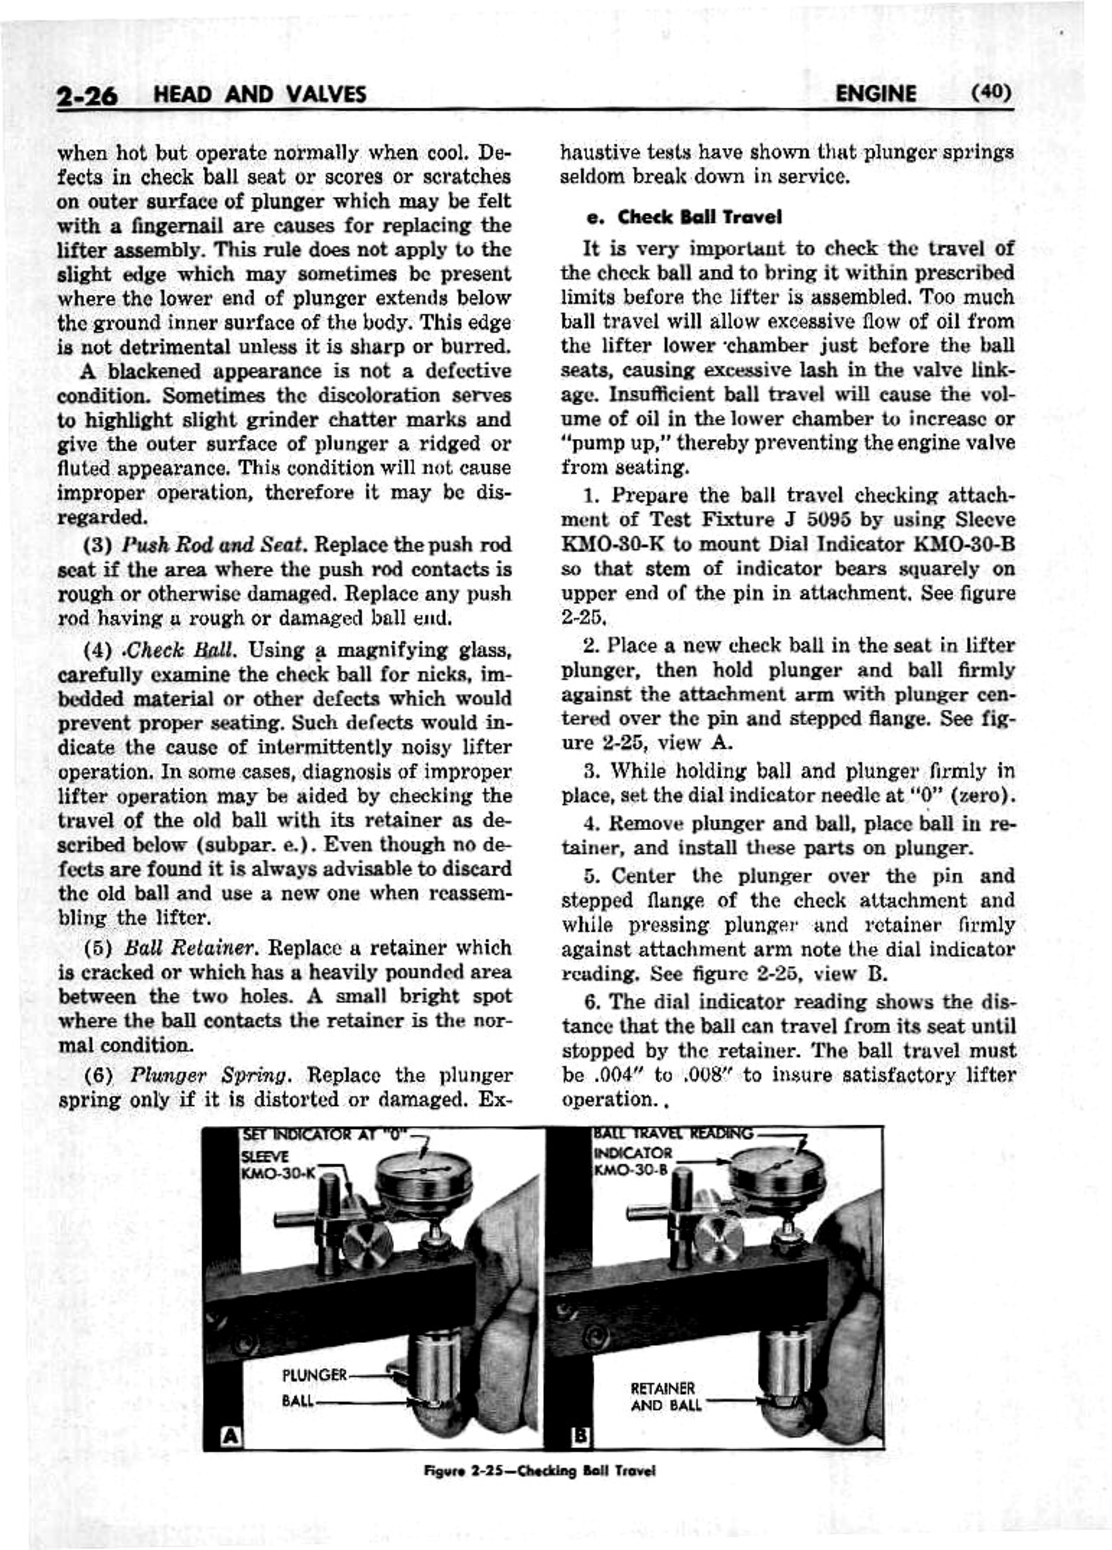 n_03 1953 Buick Shop Manual - Engine-026-026.jpg